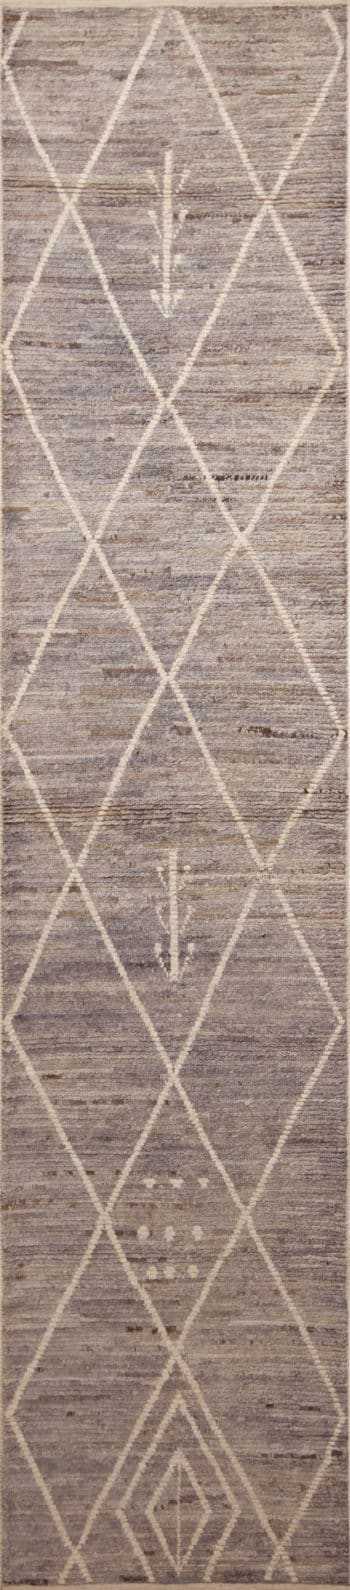 Tribal Neutral Earthy Grey Color Geometric Design Hallway Runner Rug 11175 by Nazmiyal Antique Rugs